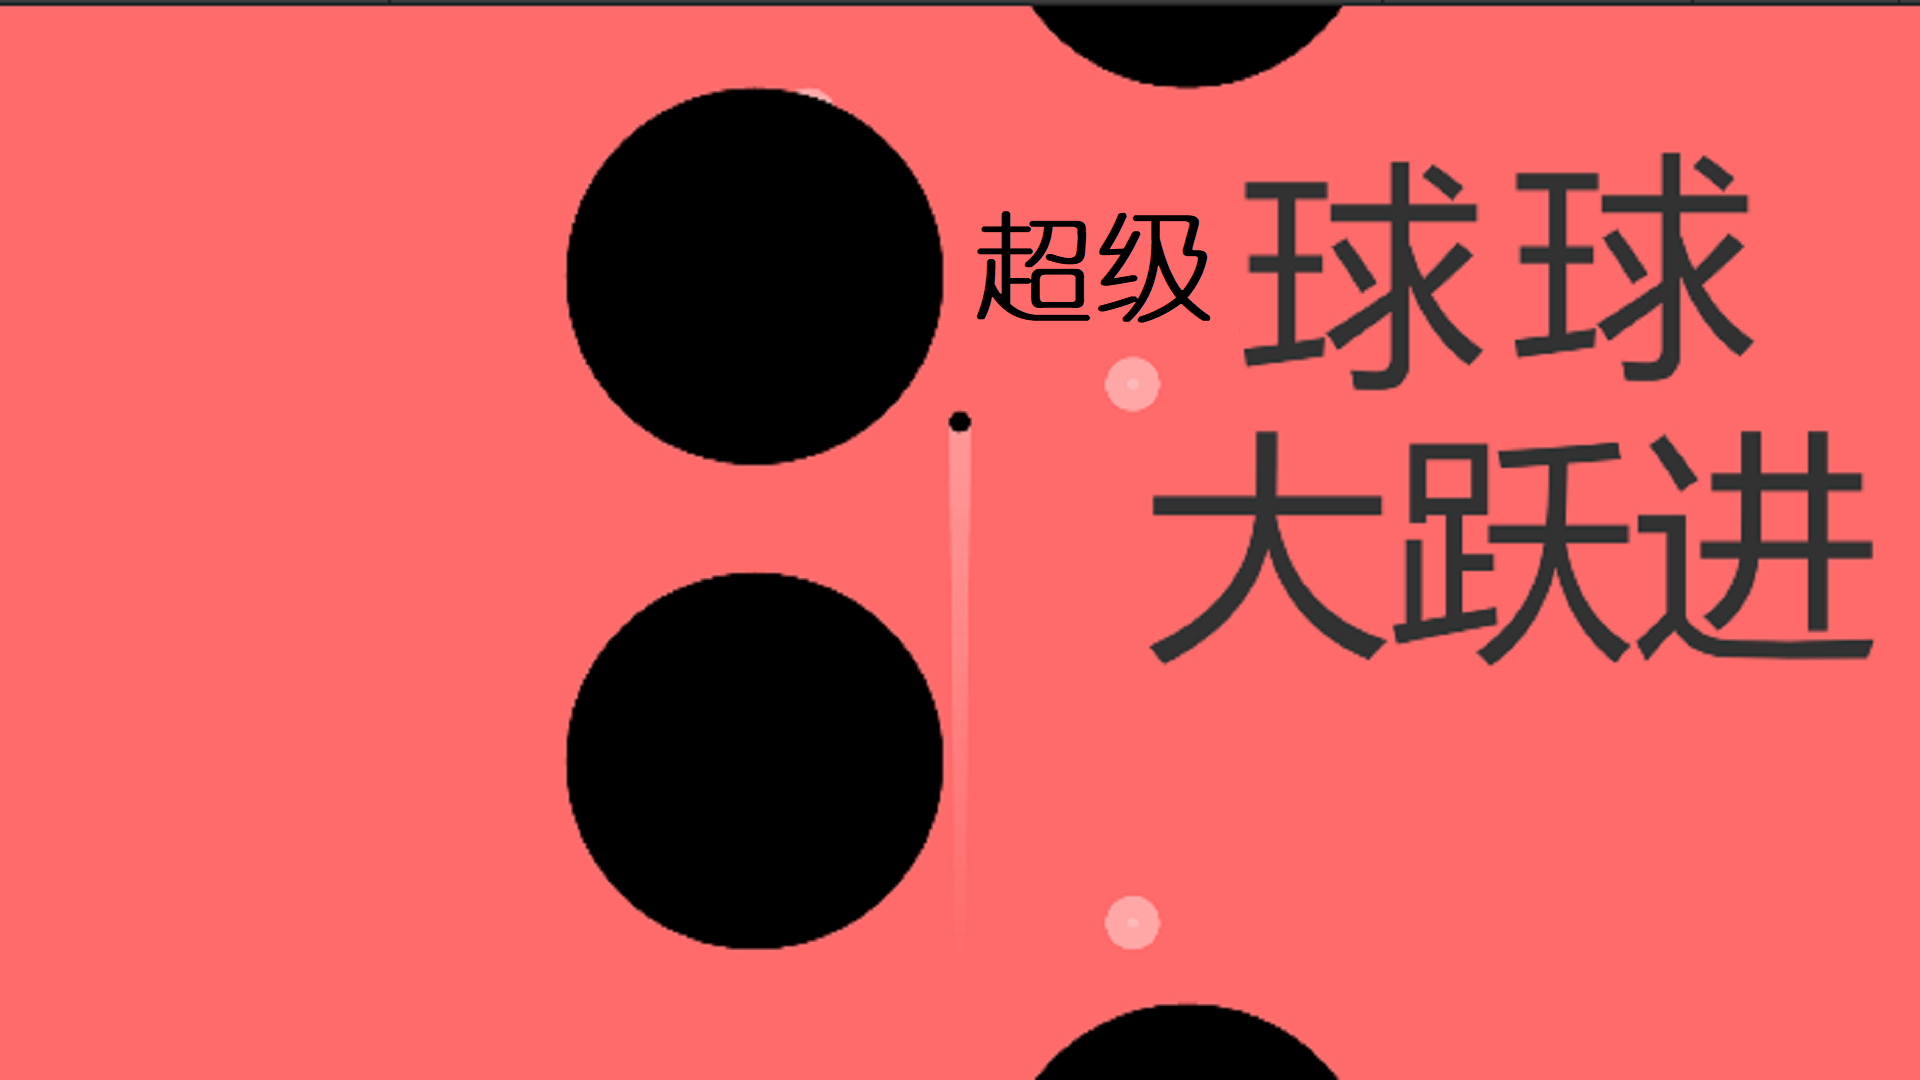 Banner of 超級球球大躍進 1.0